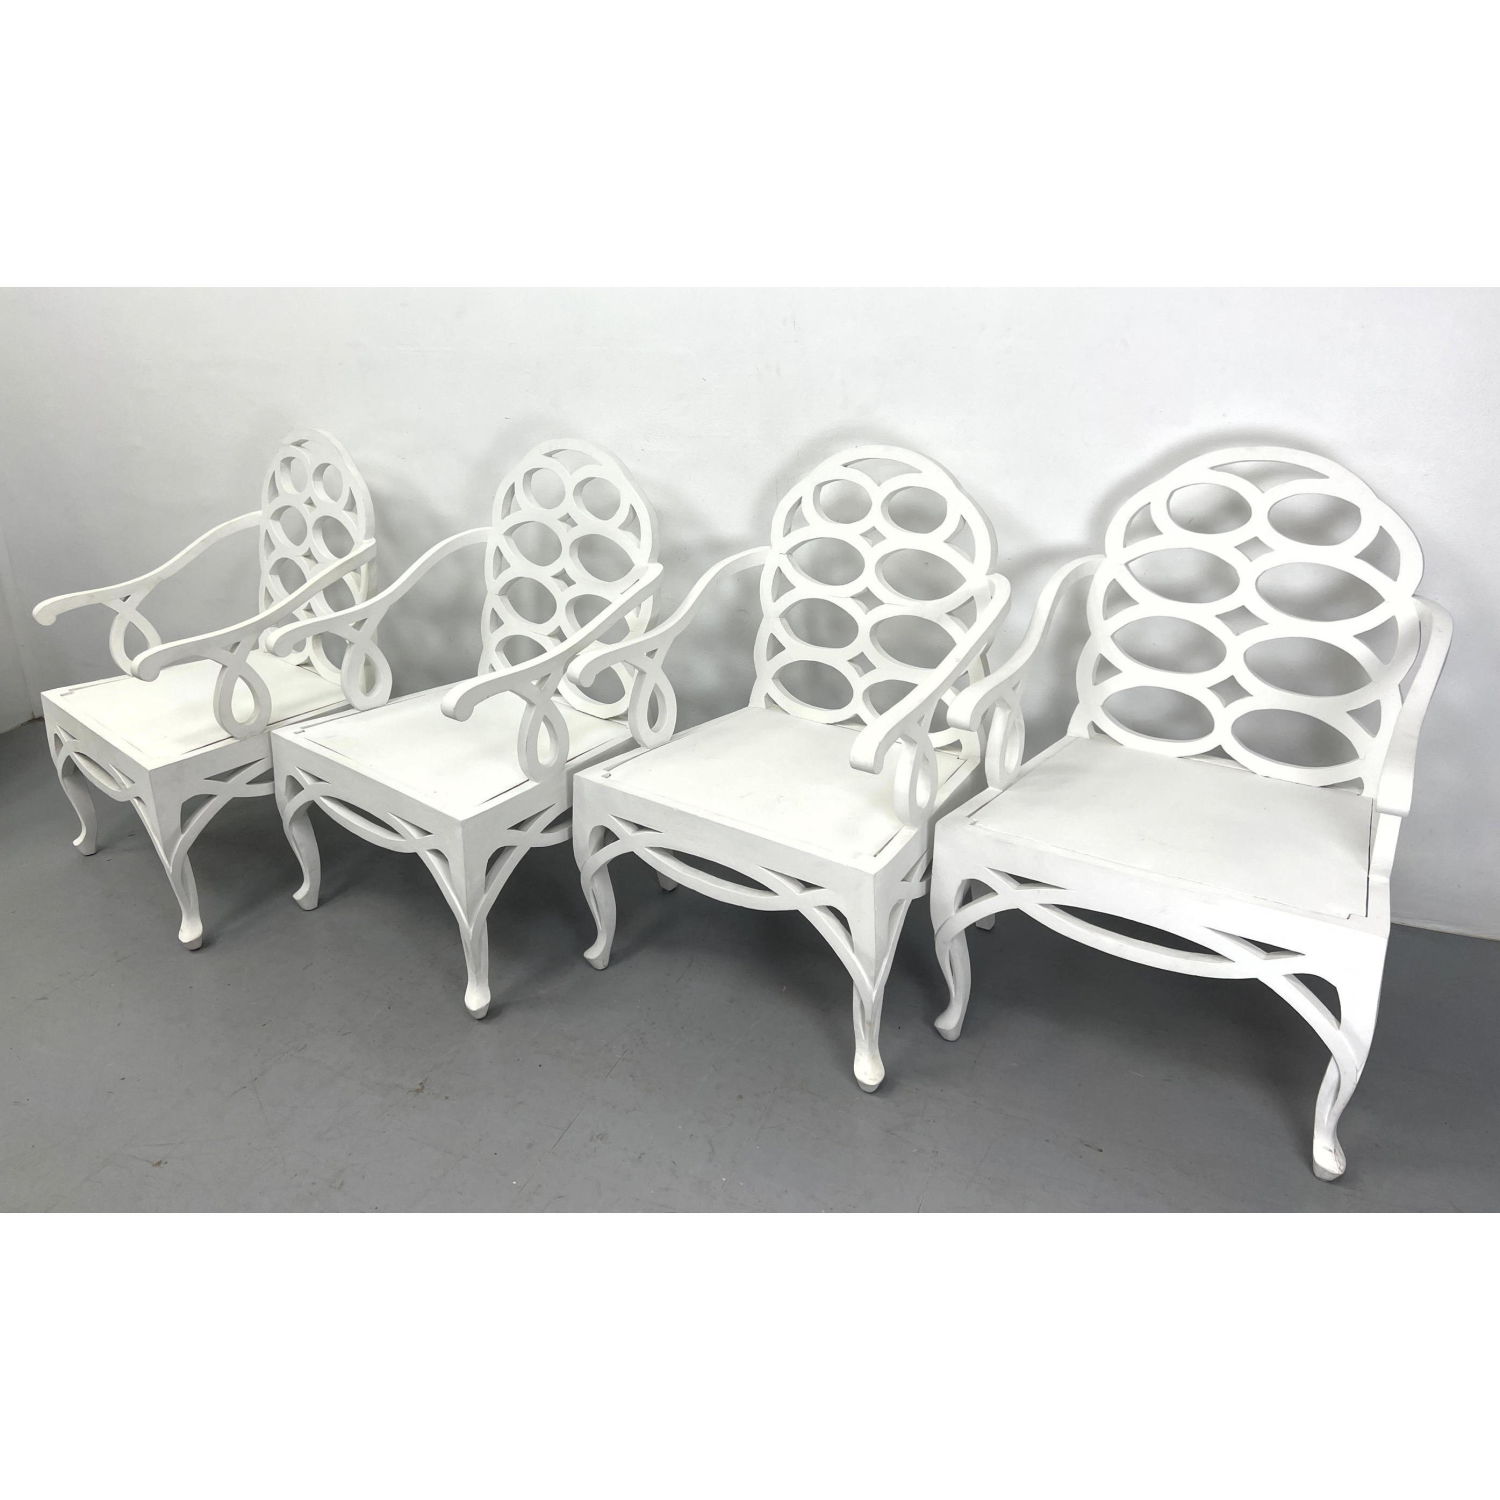 Set 4 Designer Arm Dining Chairs  3ad69d